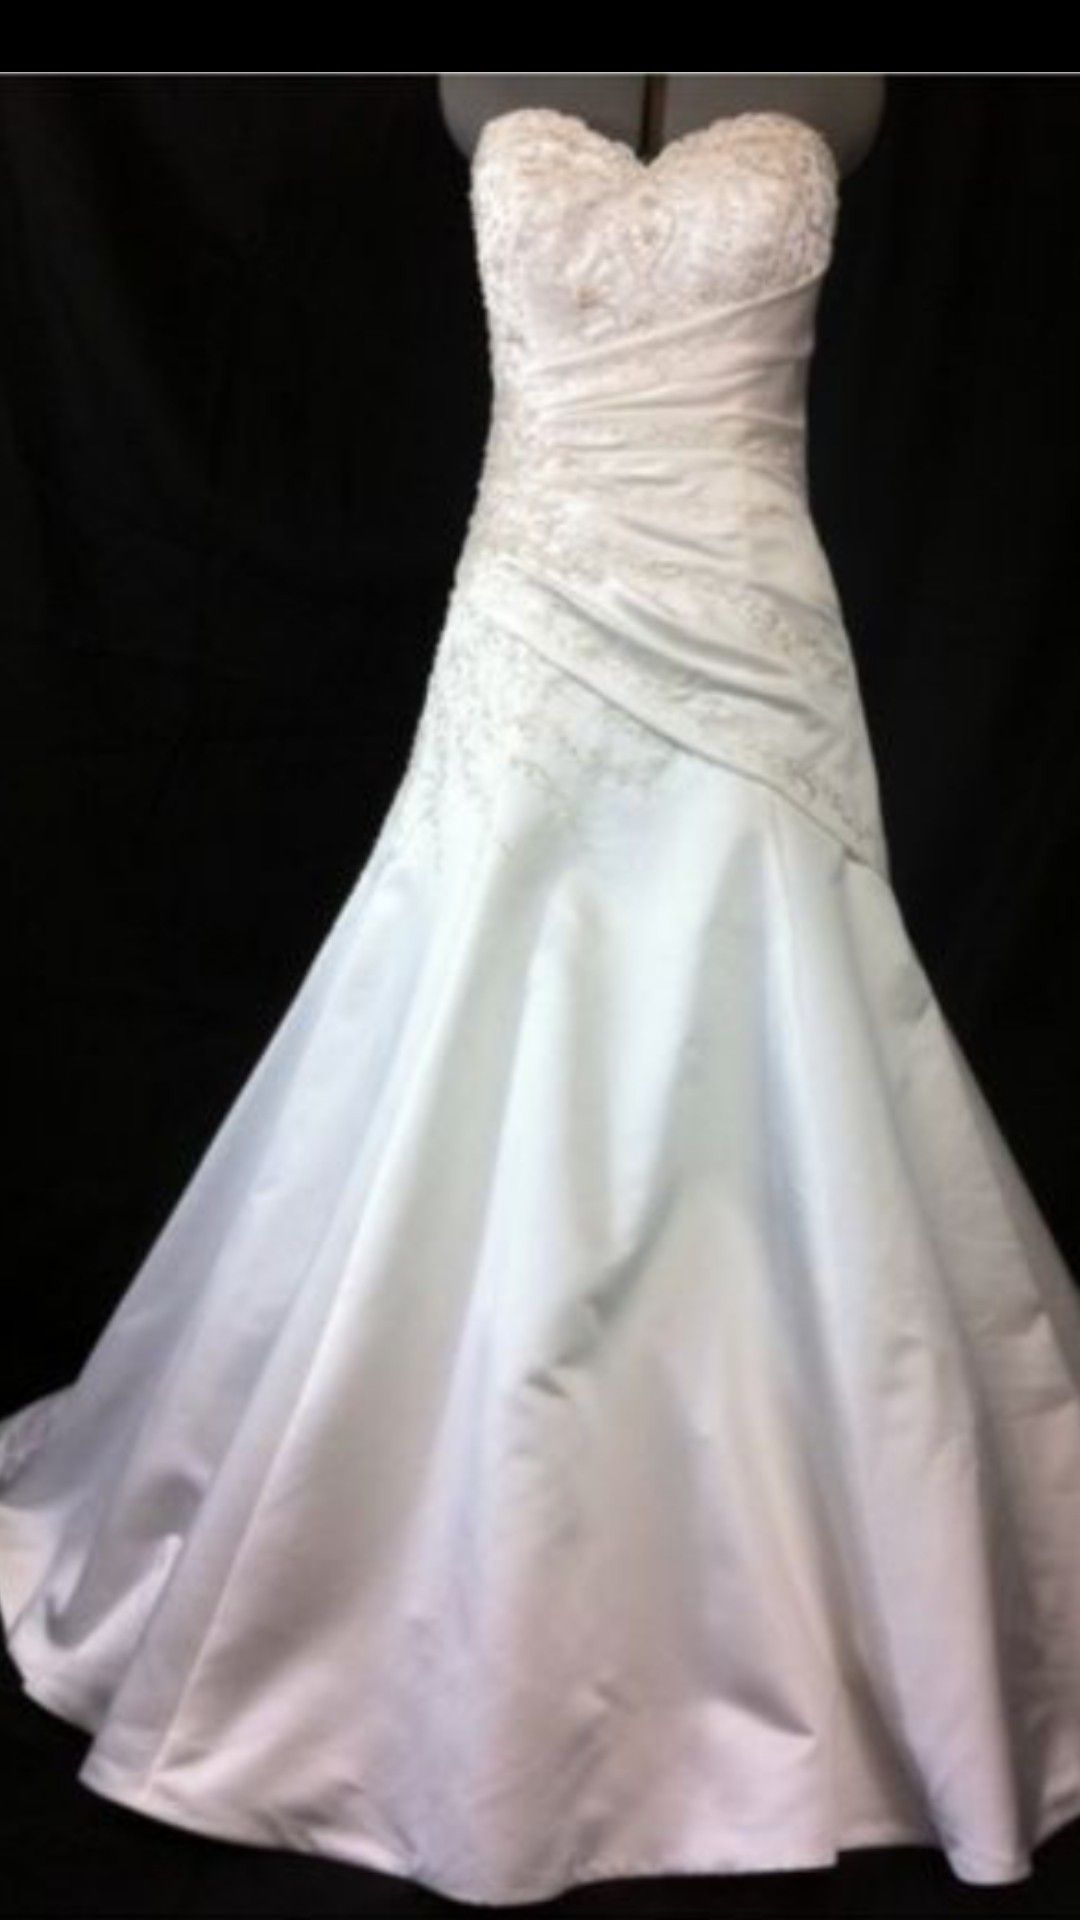 Christian Michelle wedding dress-size 12